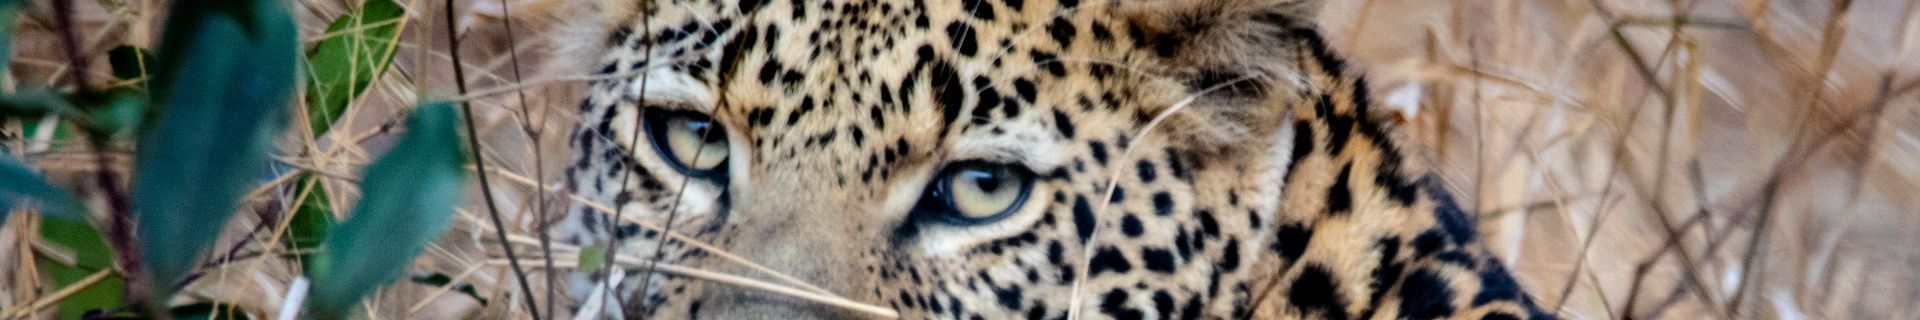 Leopard National Park in Tanzania